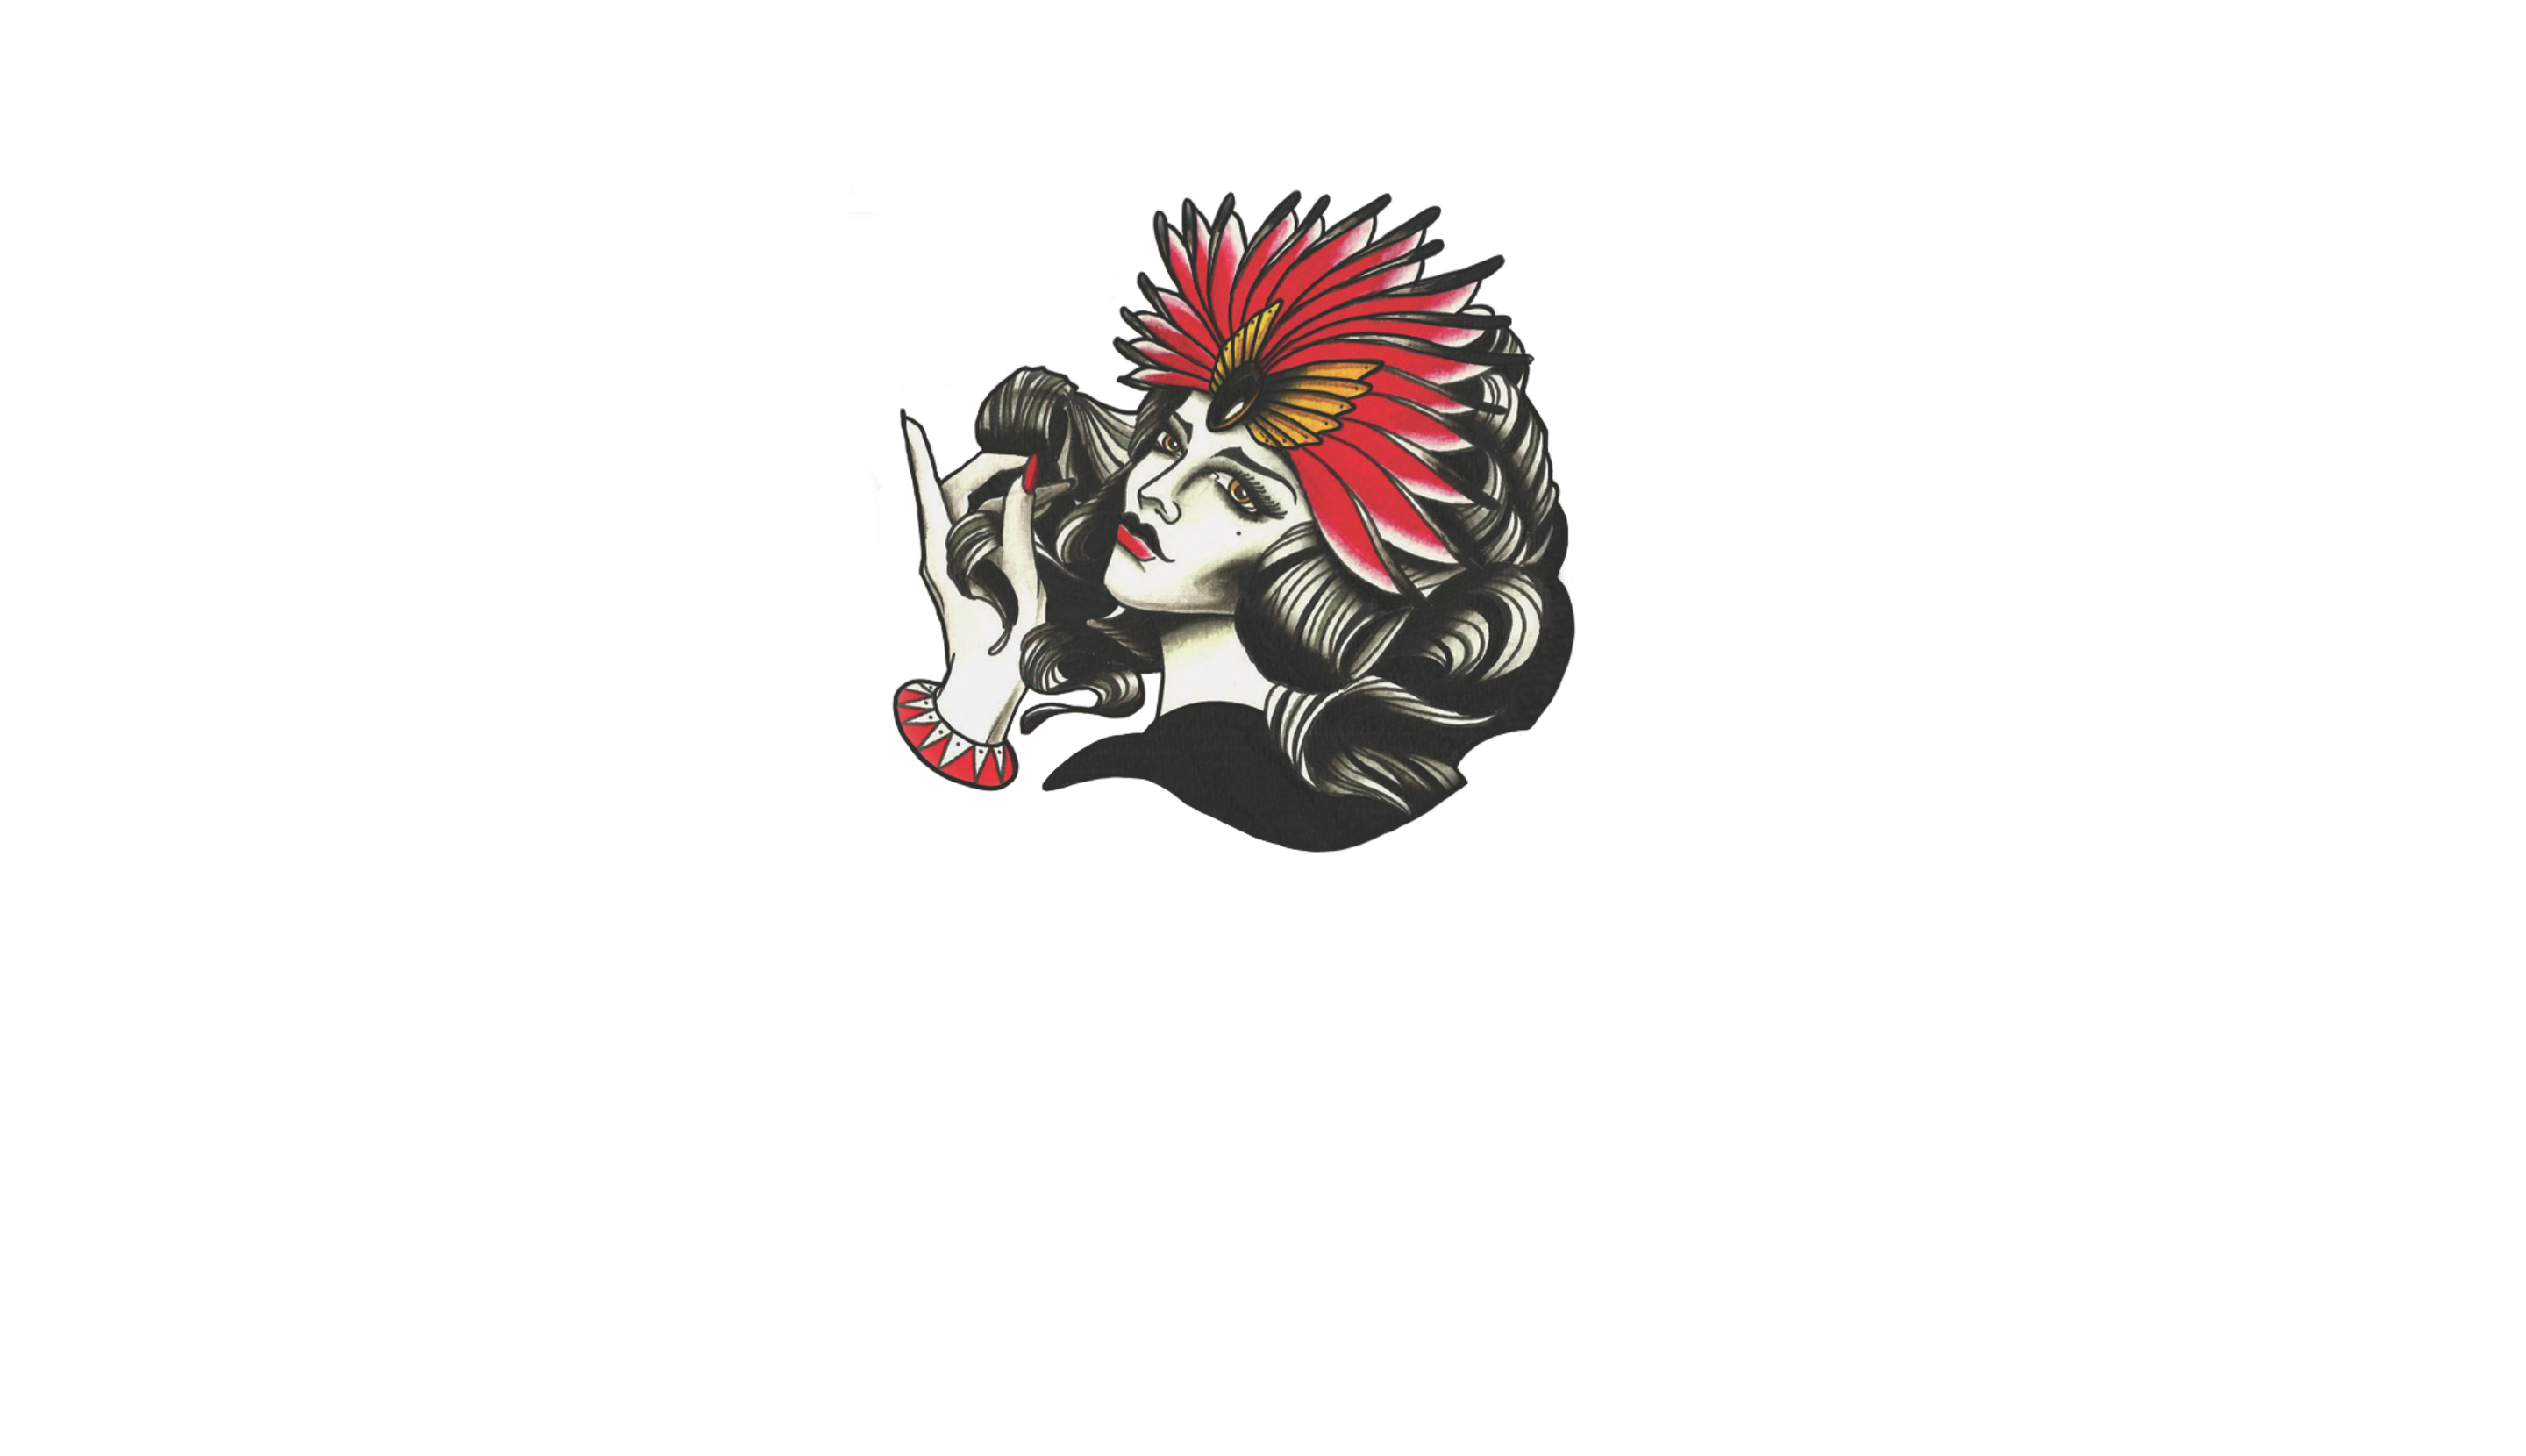 Bratislava Burlesque